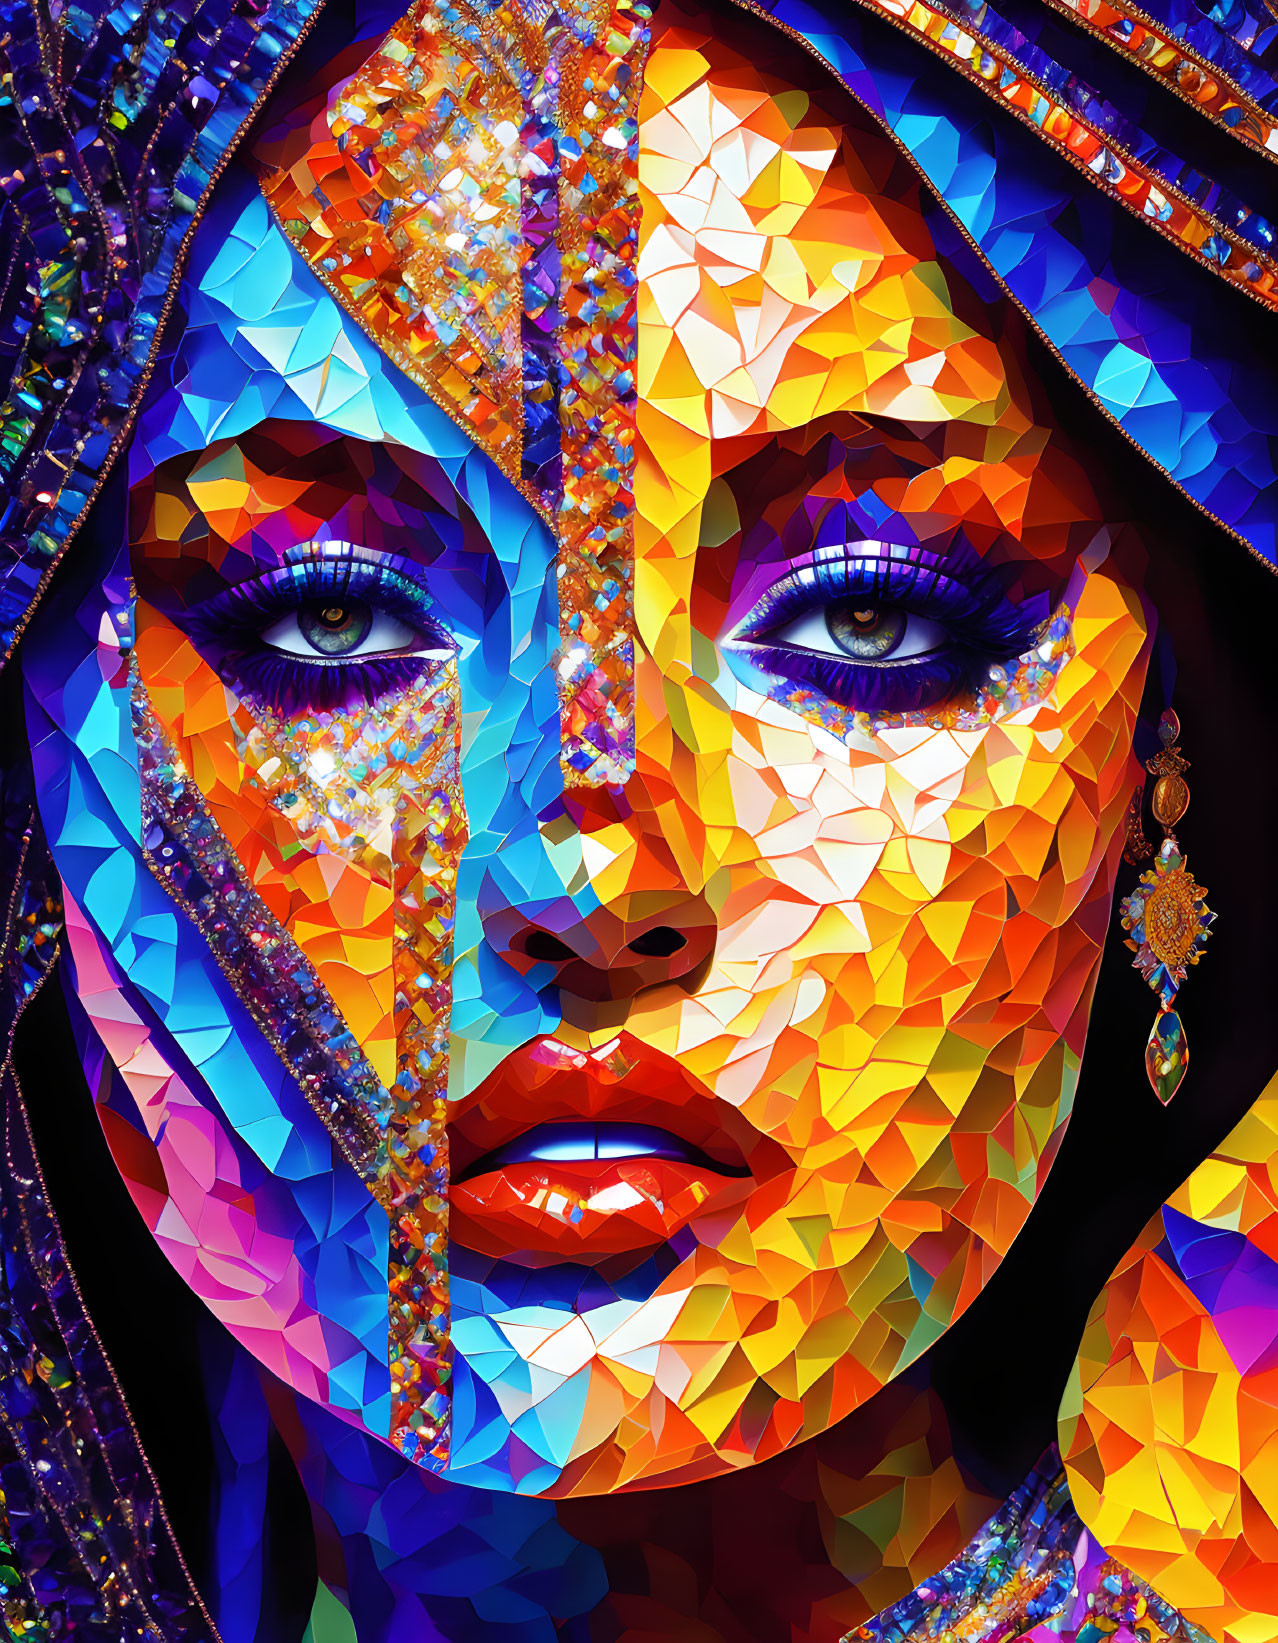 Mosaic woman